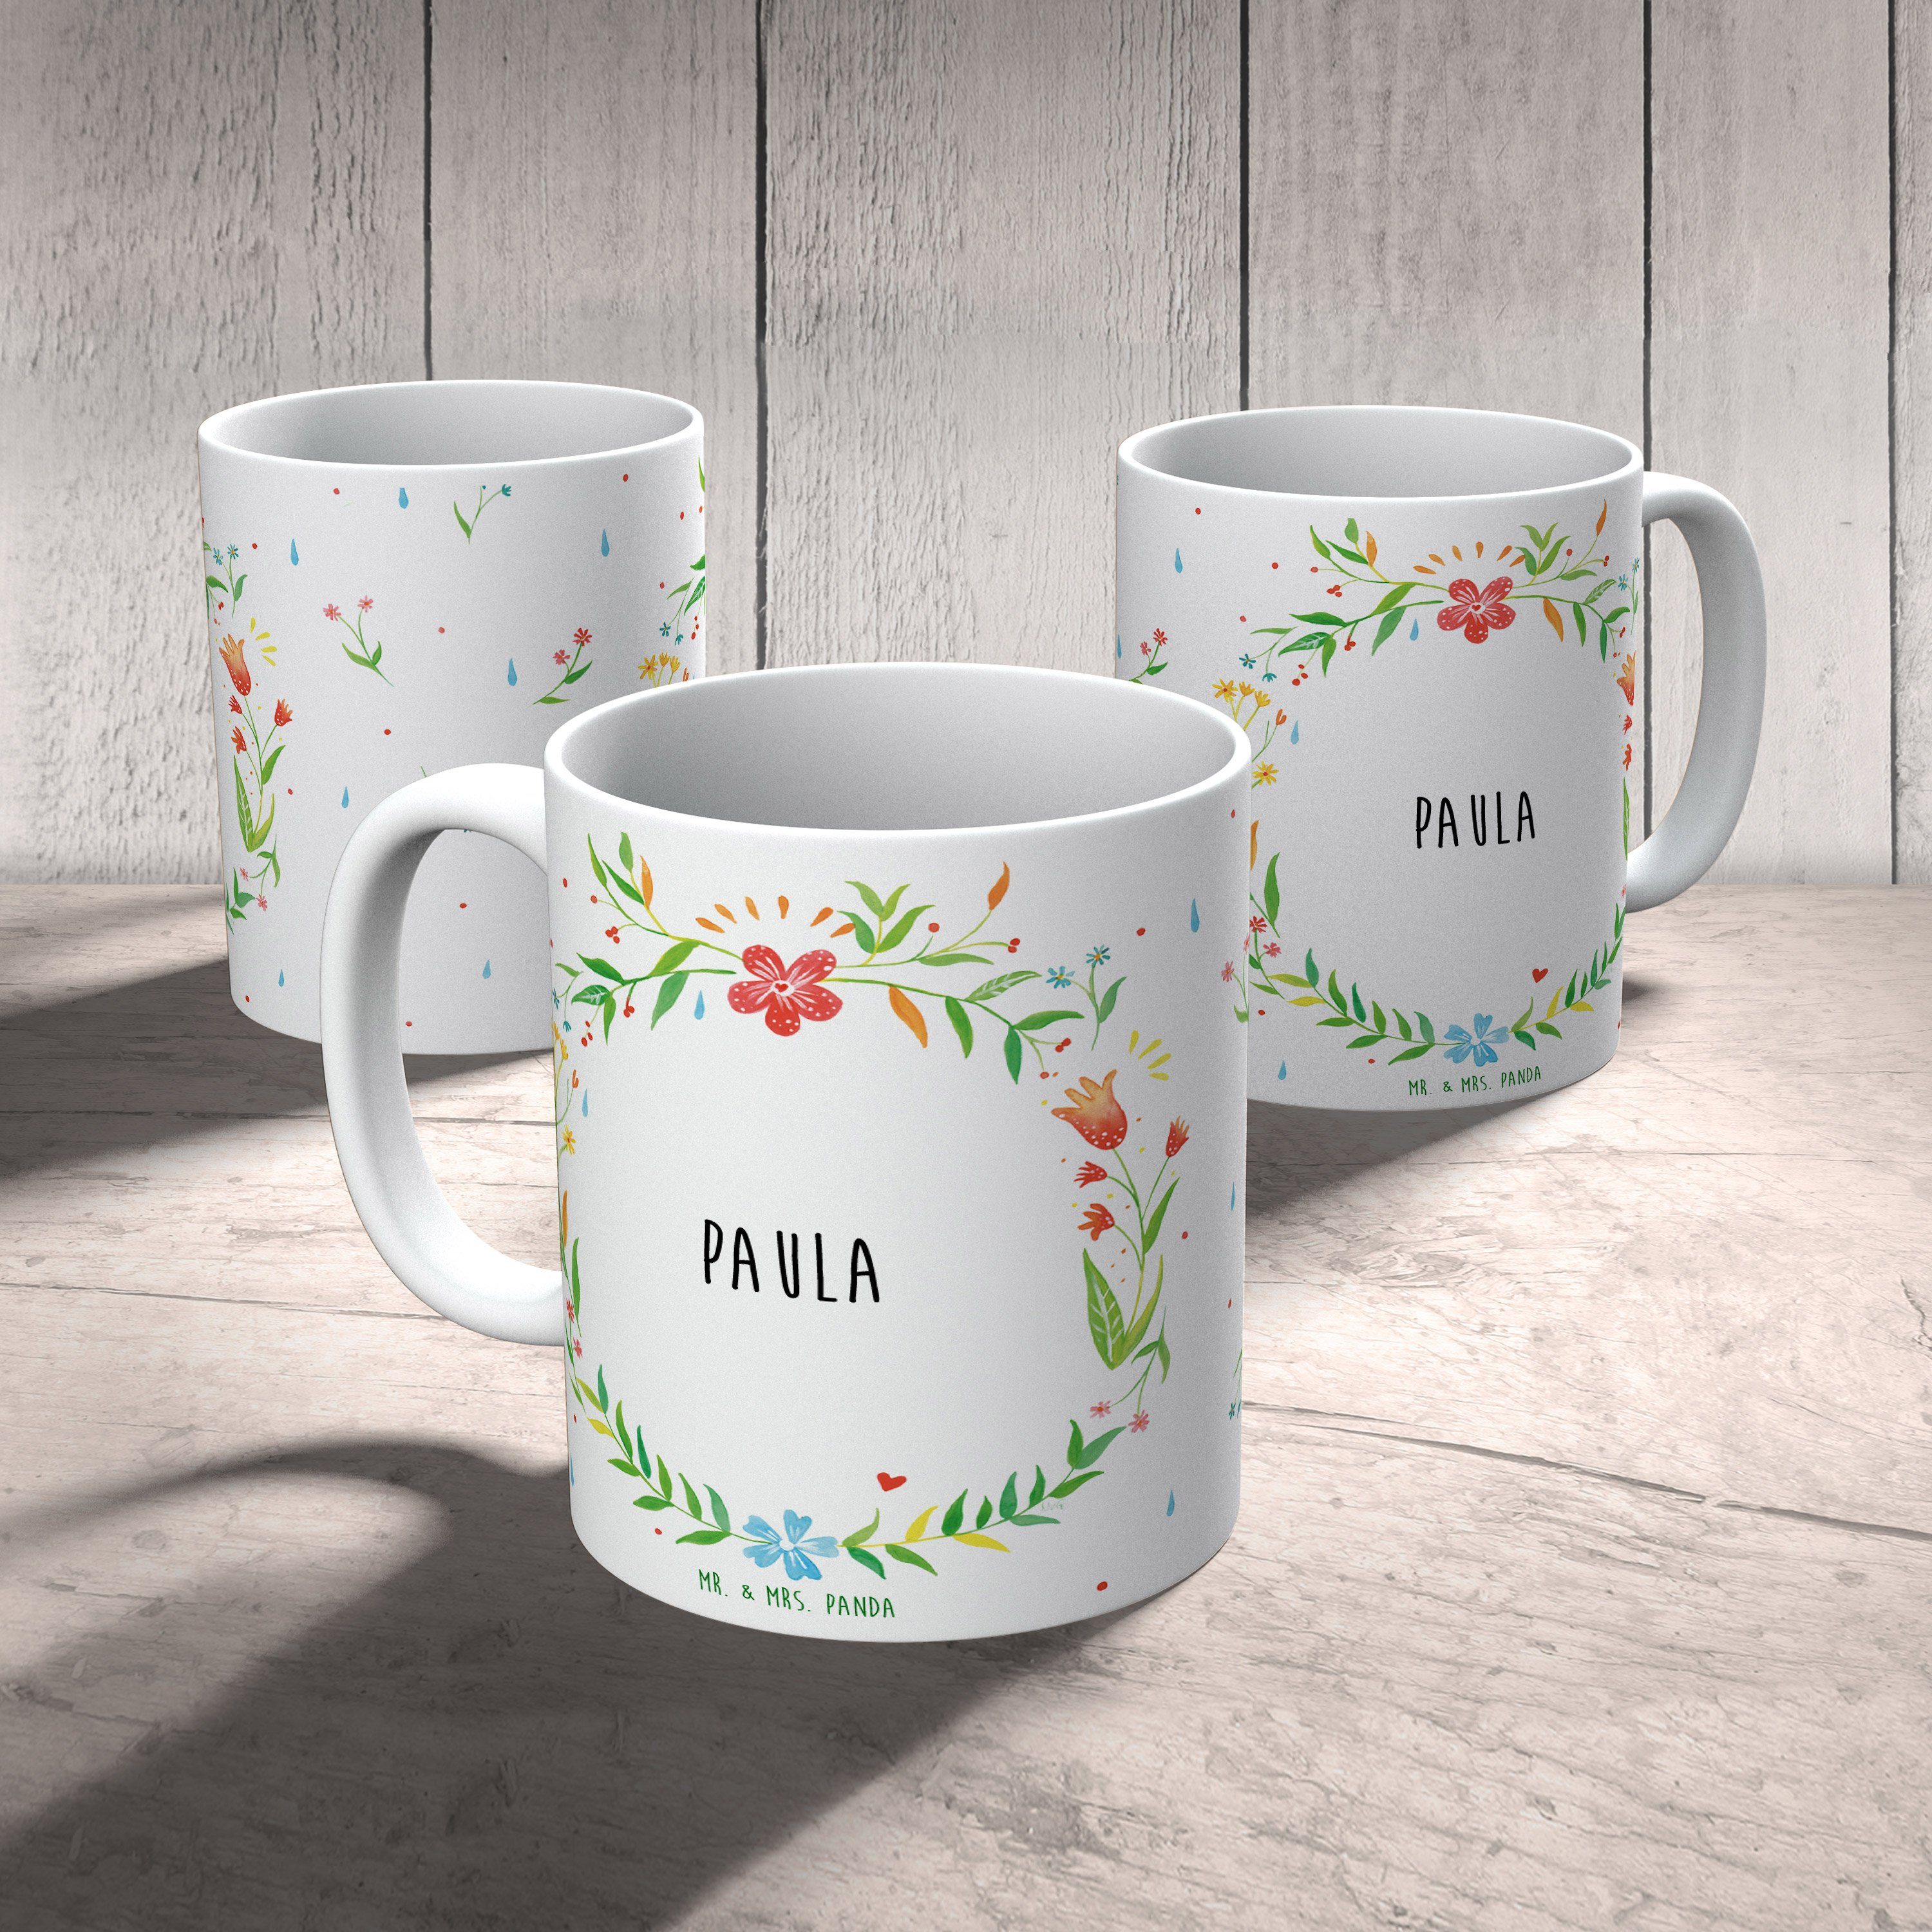 Mrs. - & Motive, Porzellanta, Kaffeebecher, Geschenk, Büro Panda Keramik Mr. Tasse Tasse Tasse, Paula